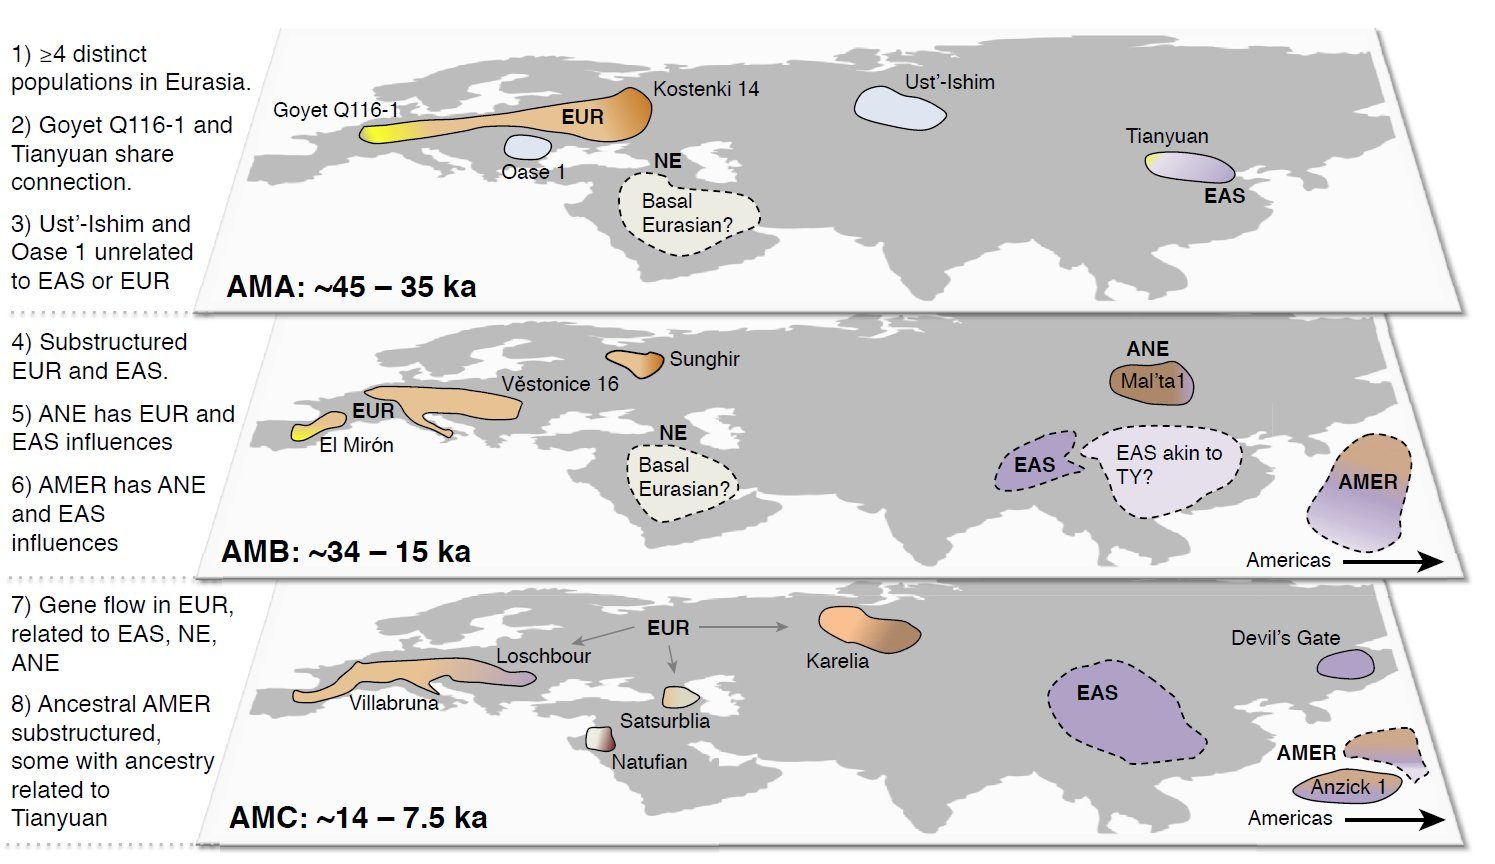 Schematic of populations in Eurasia